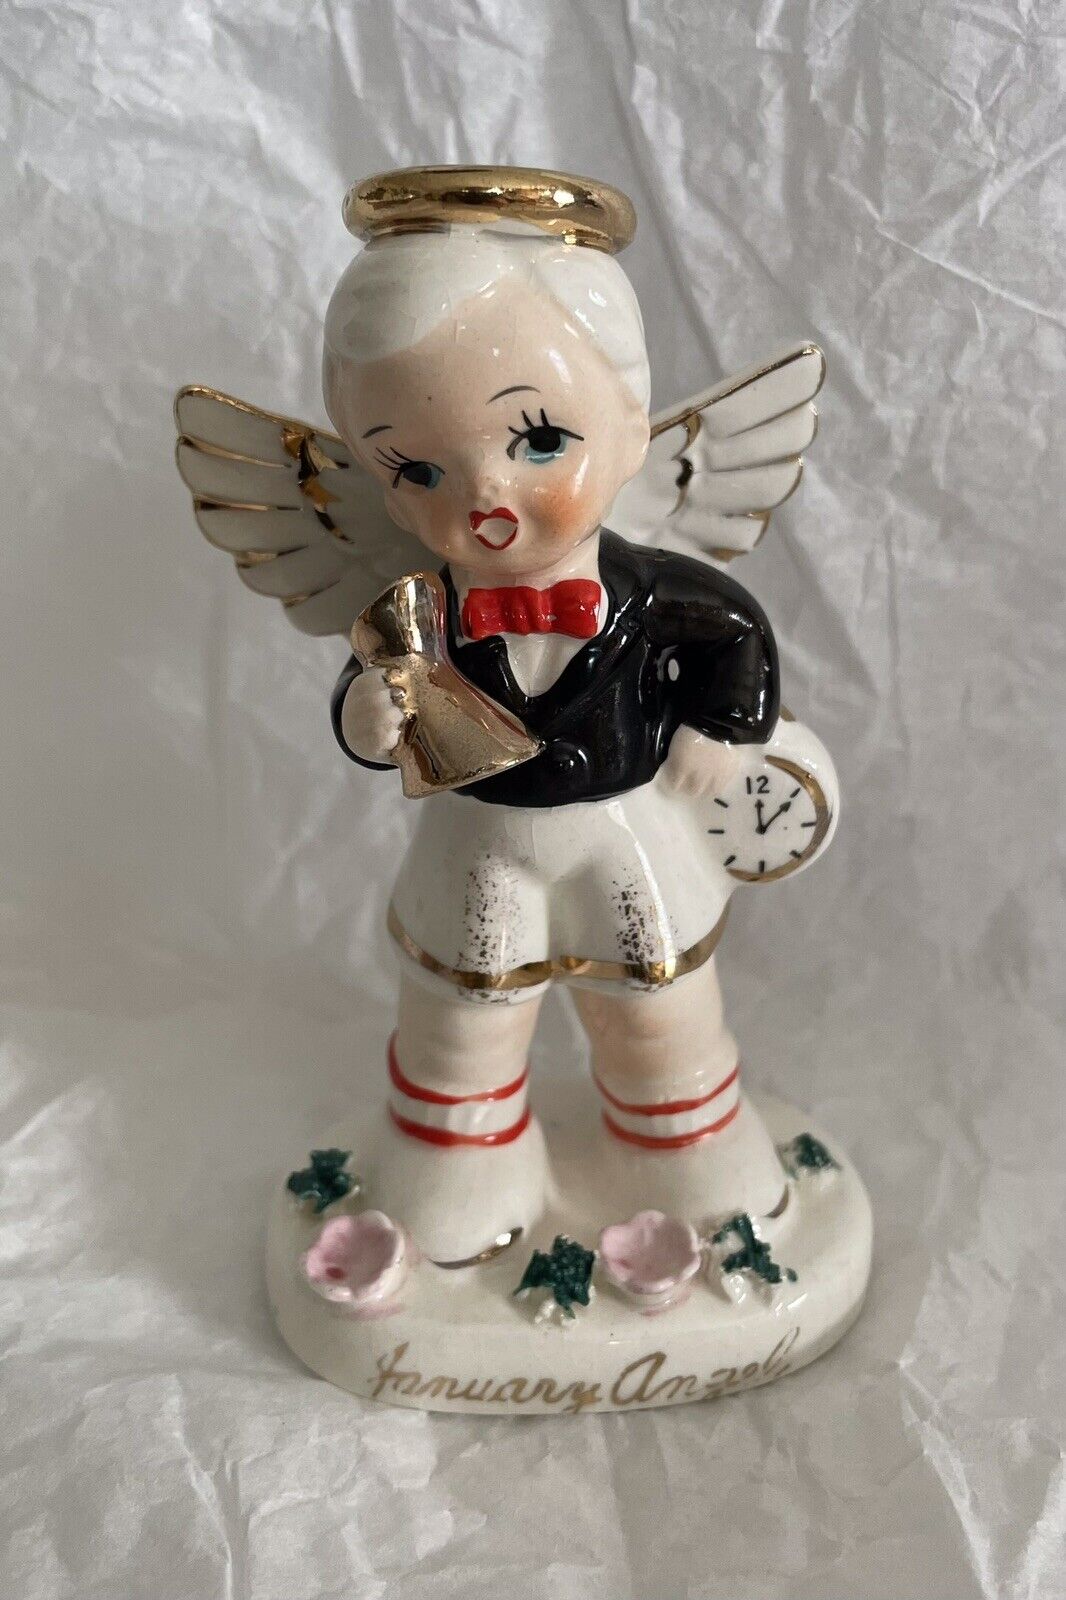 Vintage Napco January Angel Boy Figurine, Great Condition